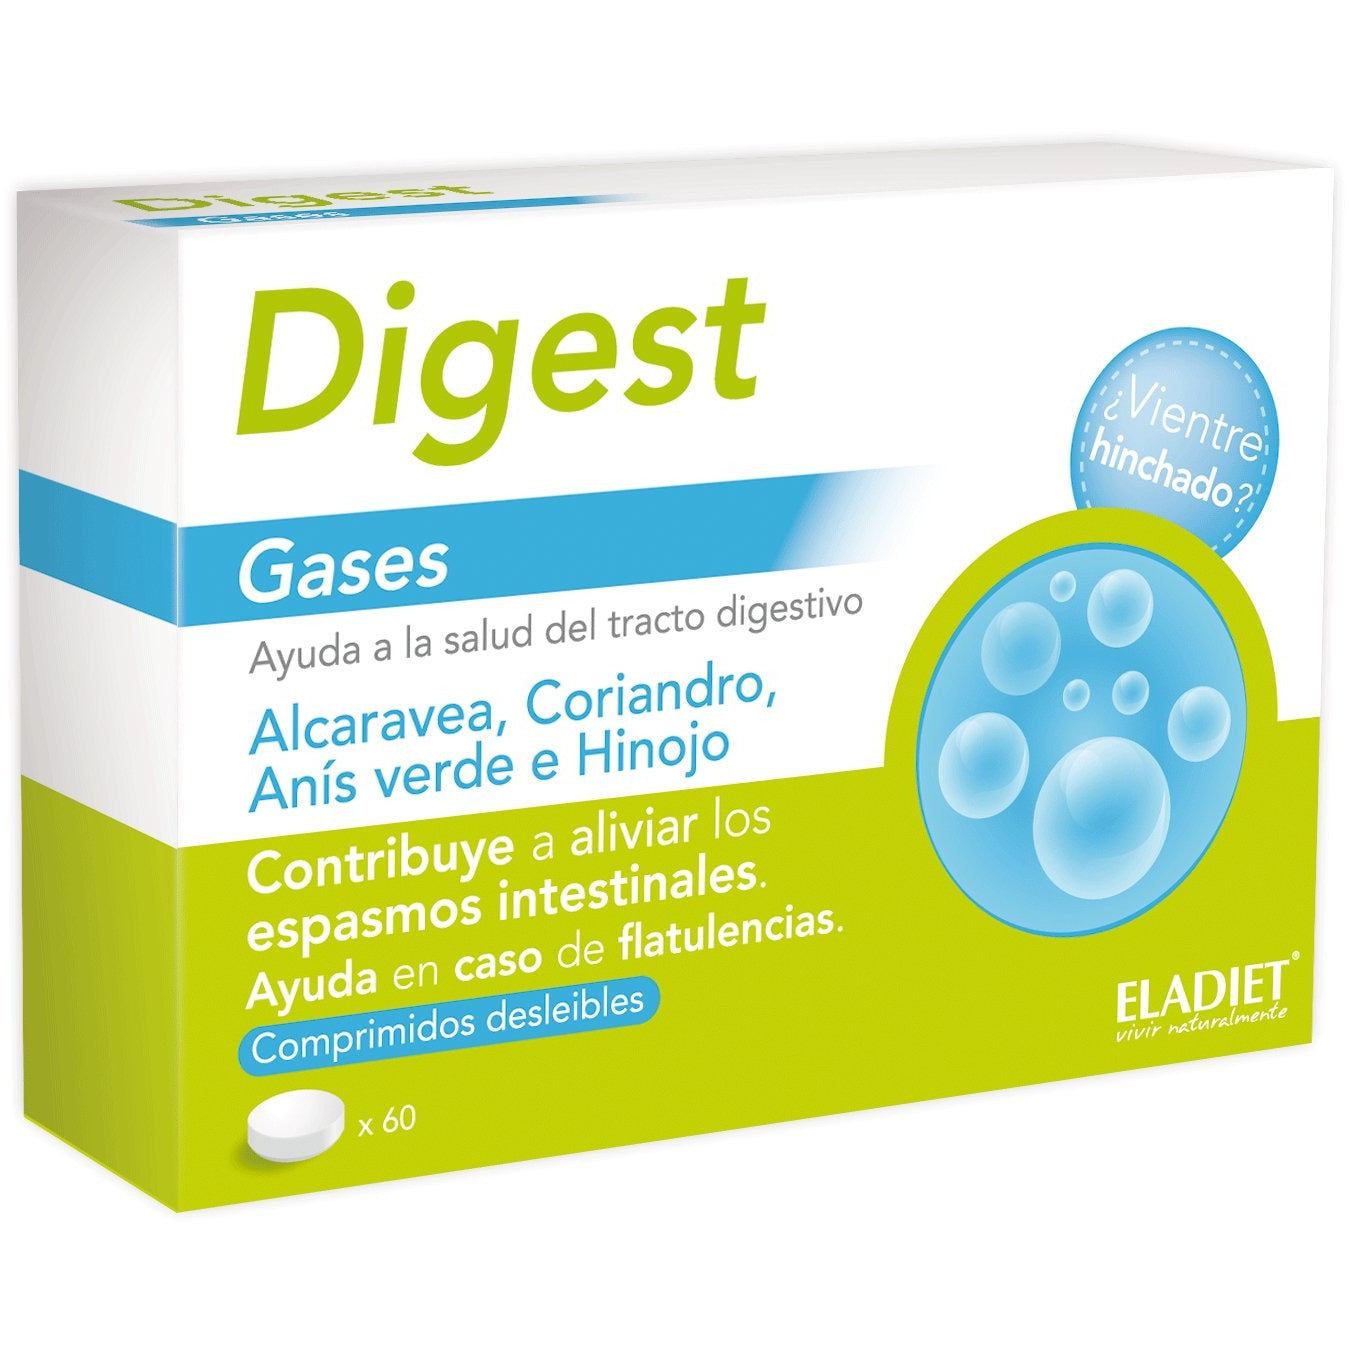 Eladiet - Digest Gases 60 Comprimidos - Biopharmacia, Parafarmacia online